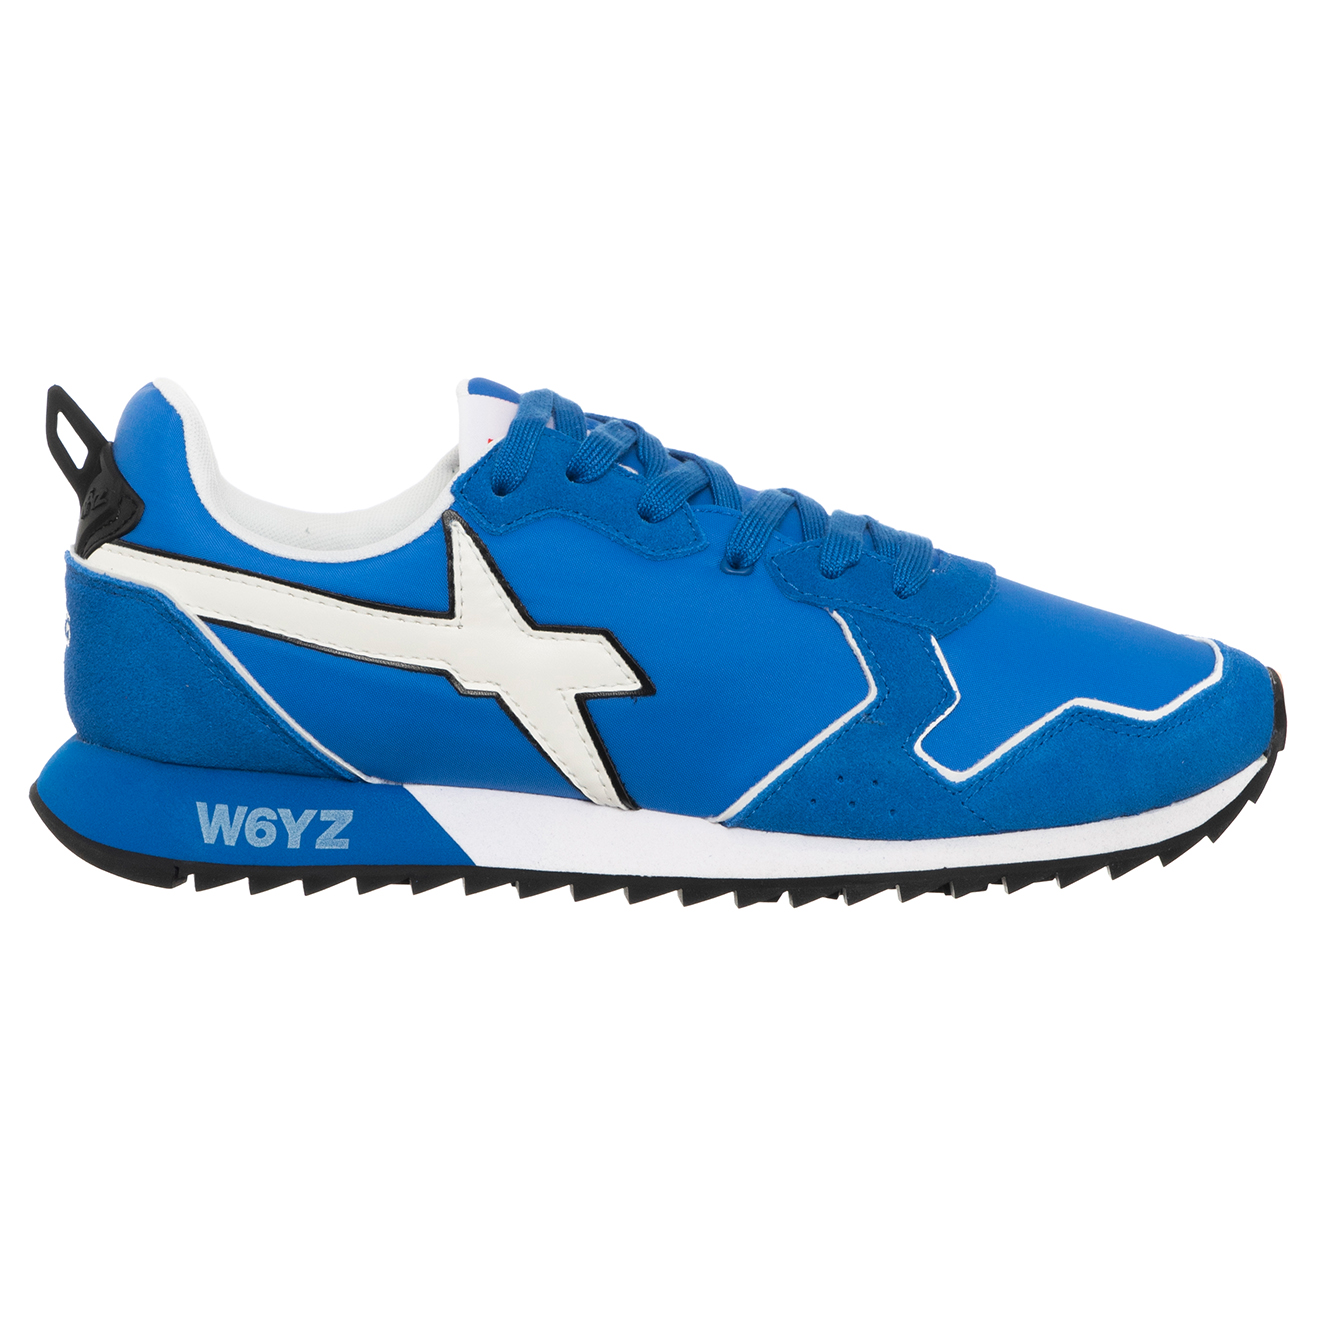 w6yz - sneakers en cuir jet bleu/blanc